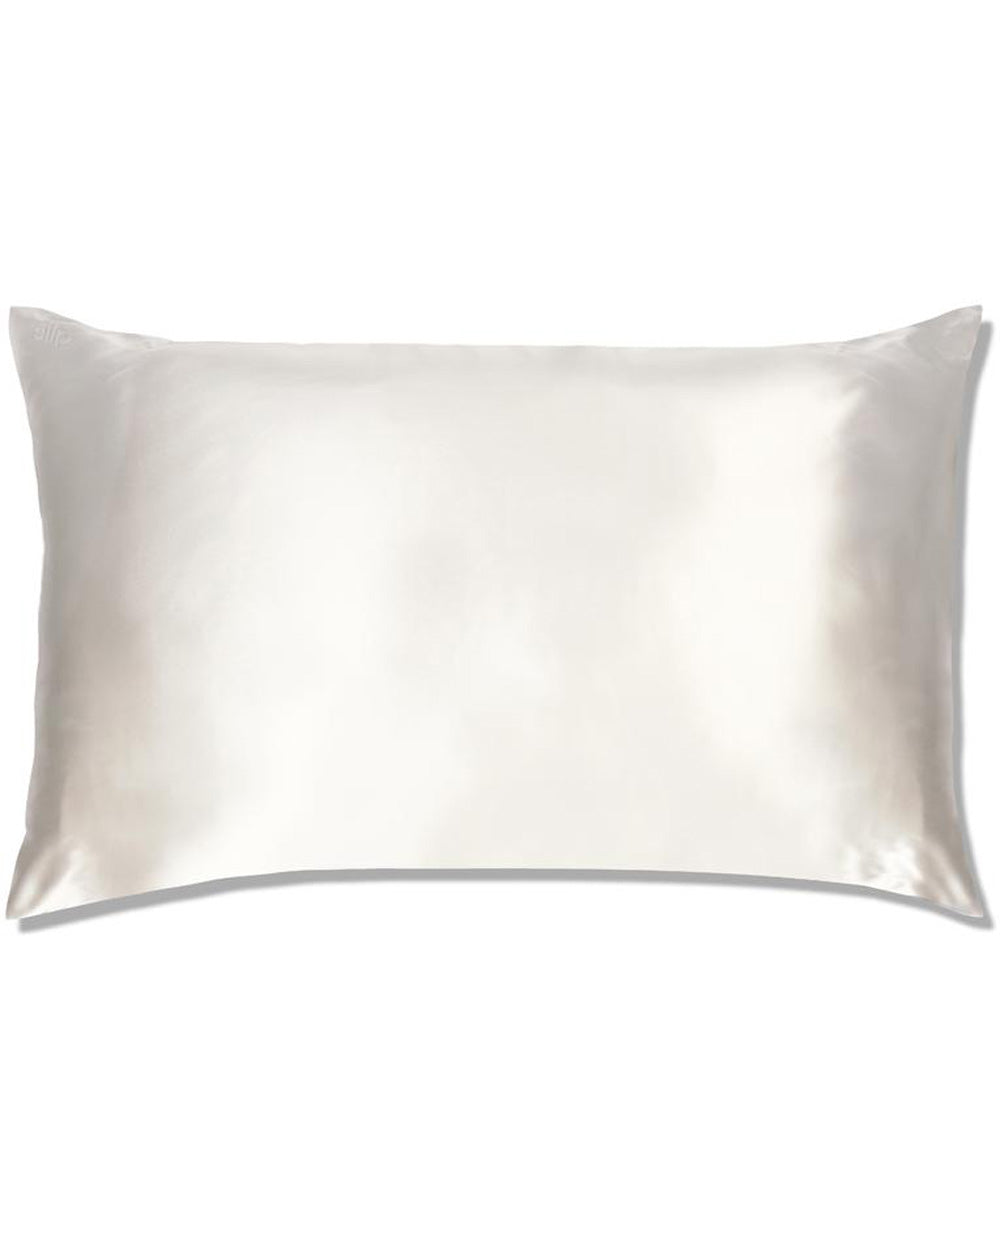 Standard King Pillow Case White